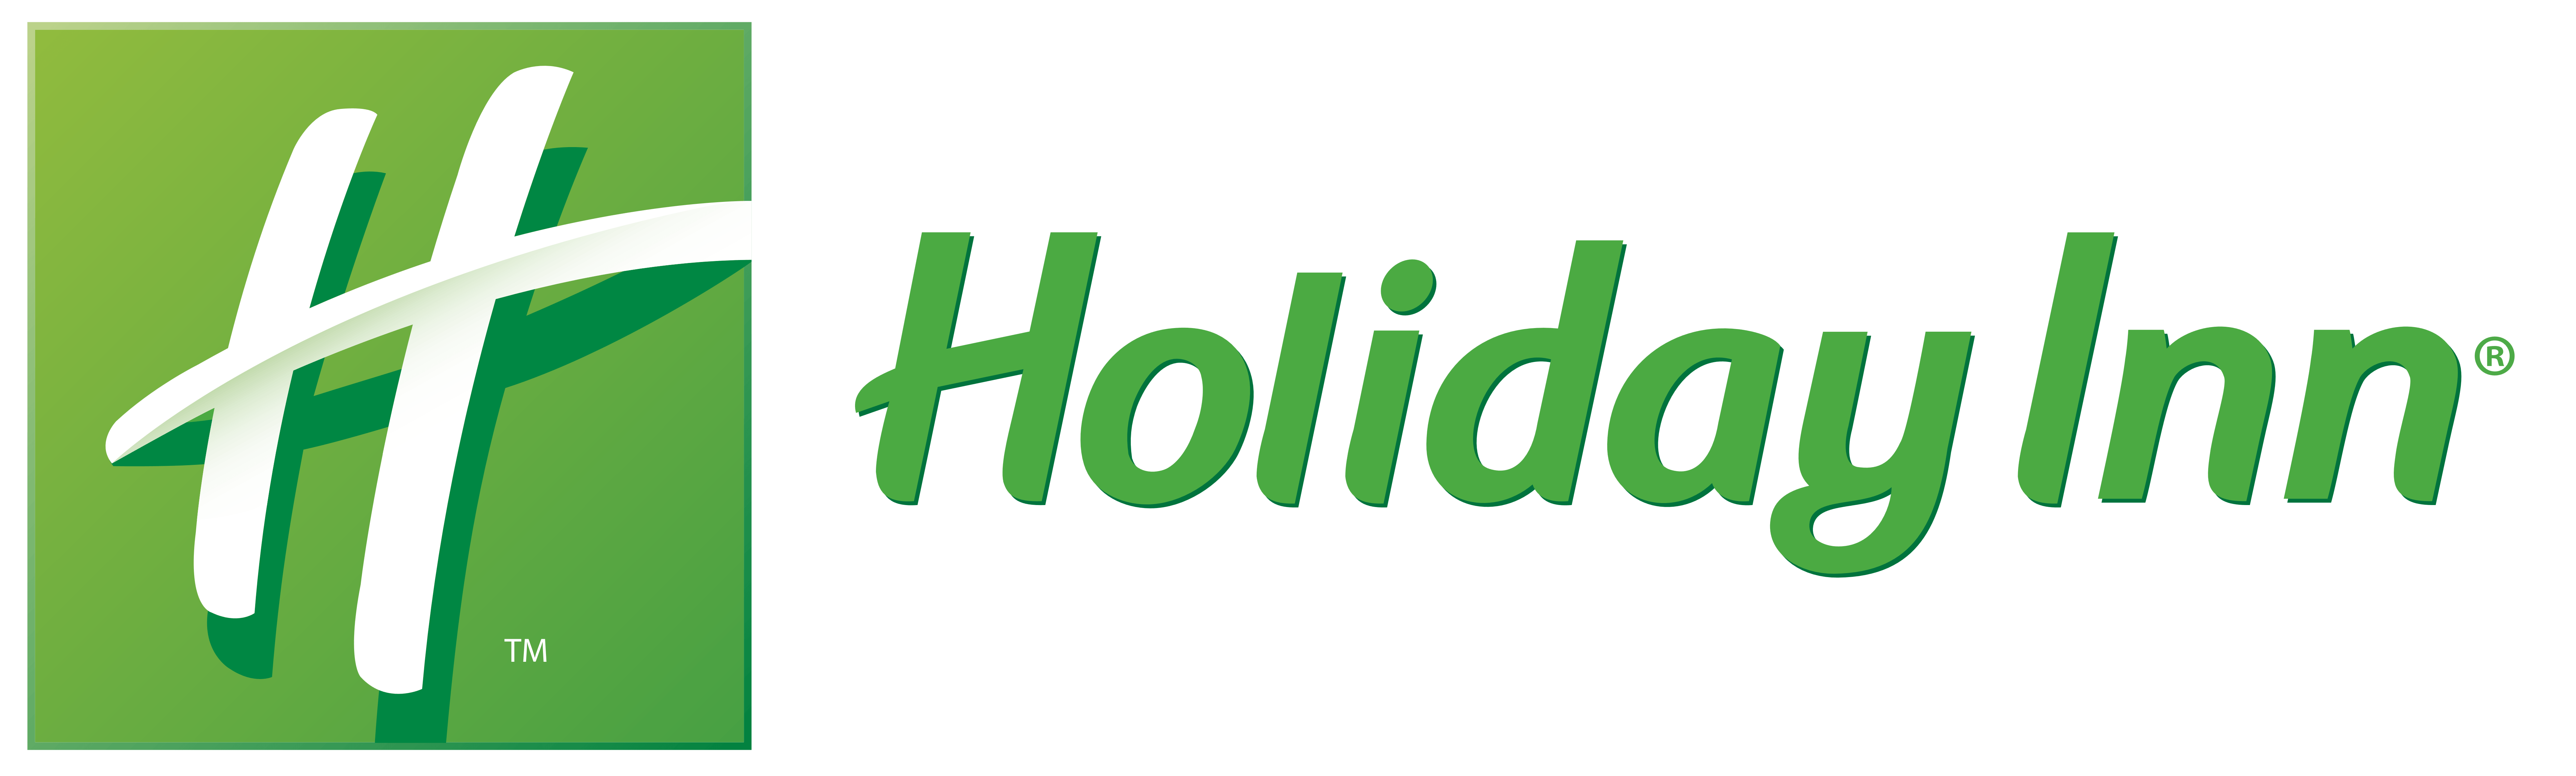 Holiday Inn Logo - Holiday Inn – Logos Download